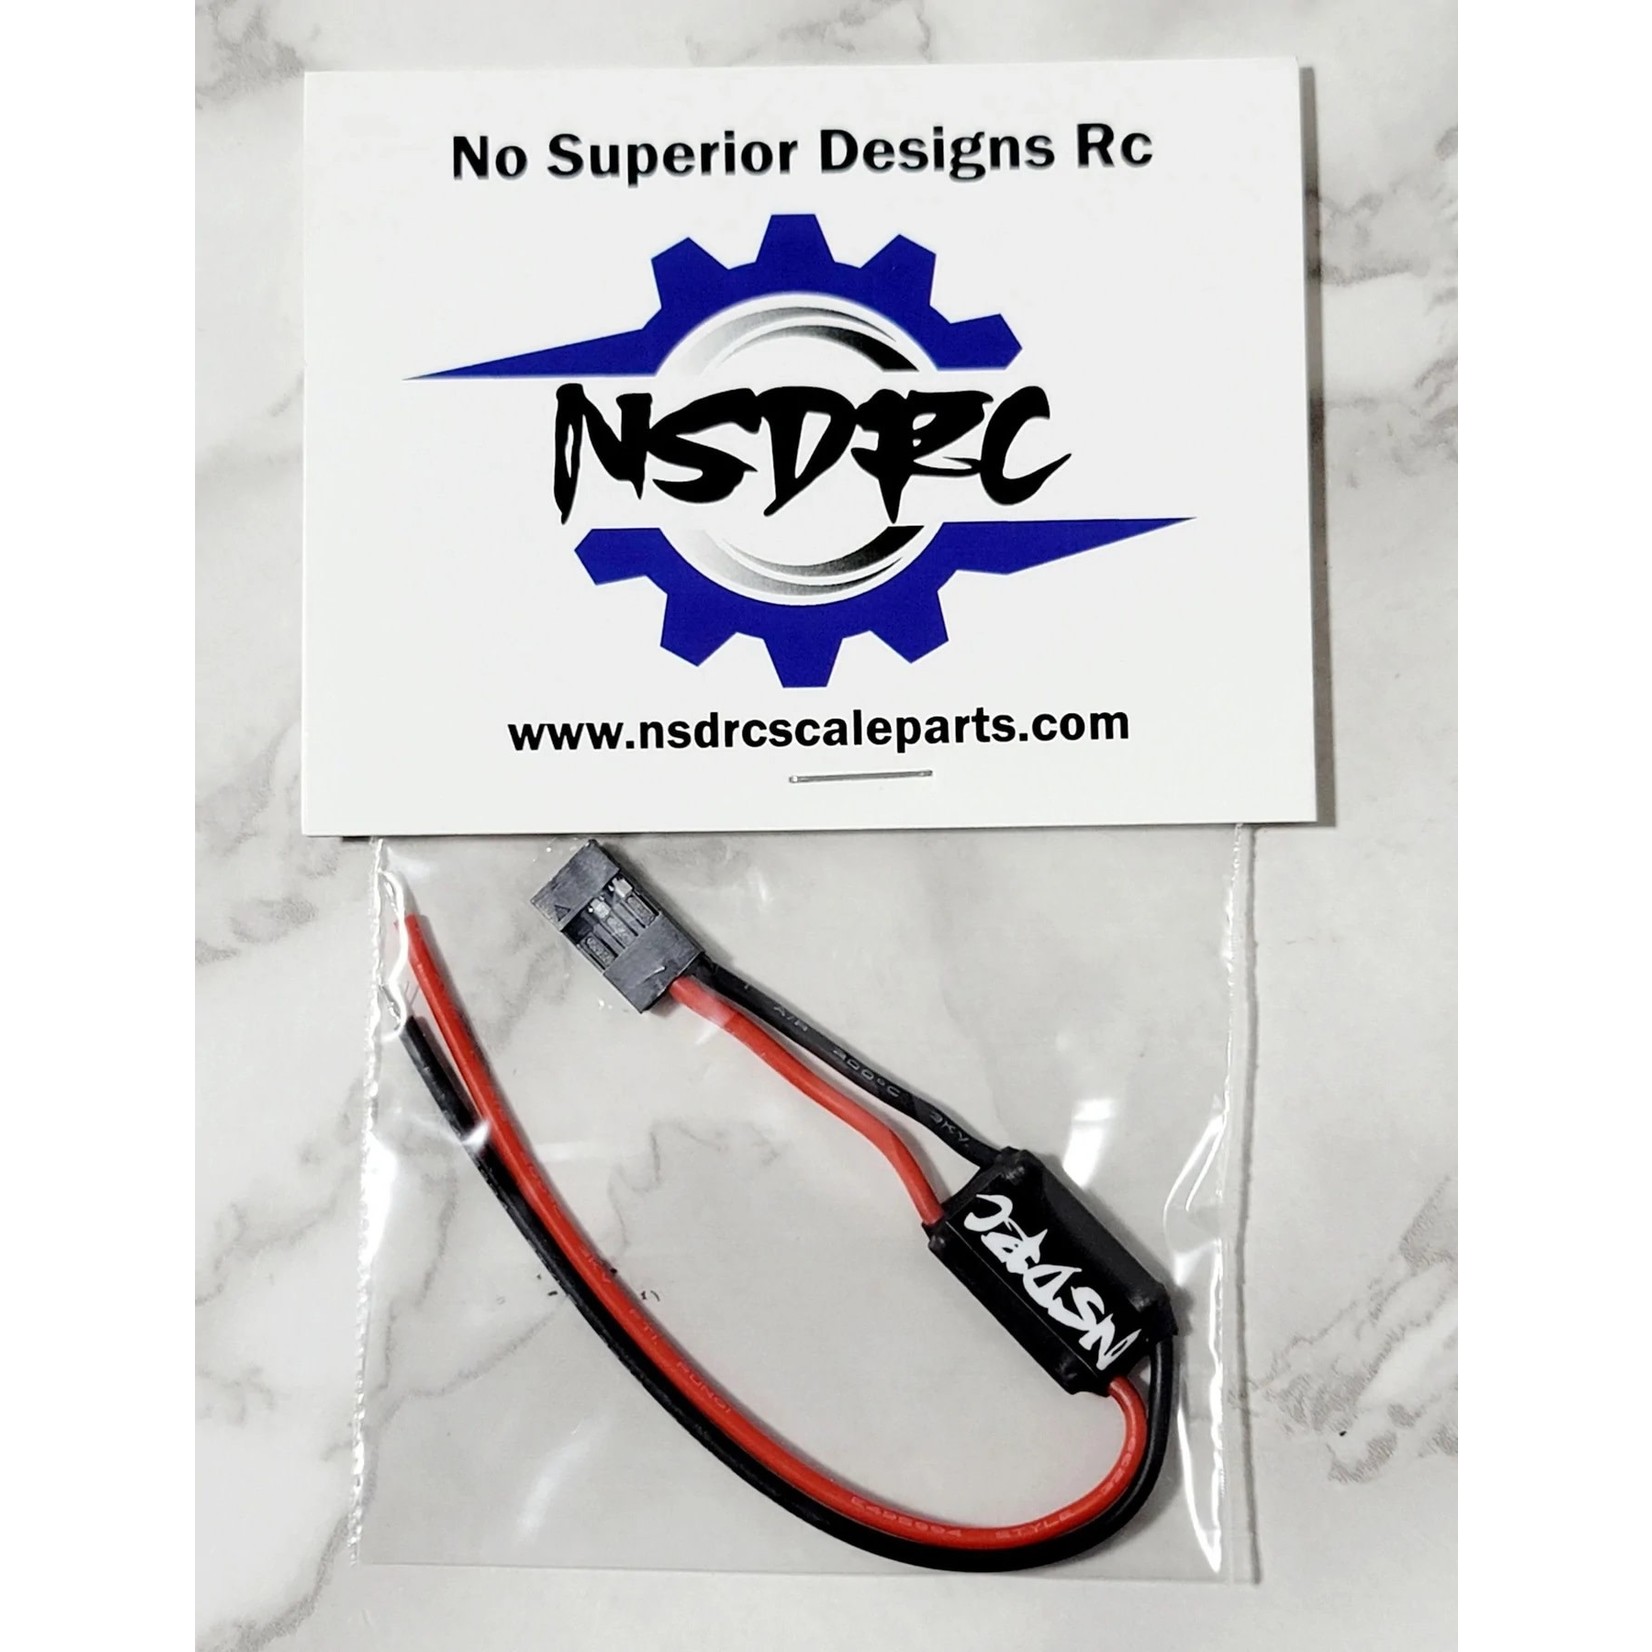 NSDRC NSDRC 6v Micro Bec/Solder Connector #NSD-MB6S